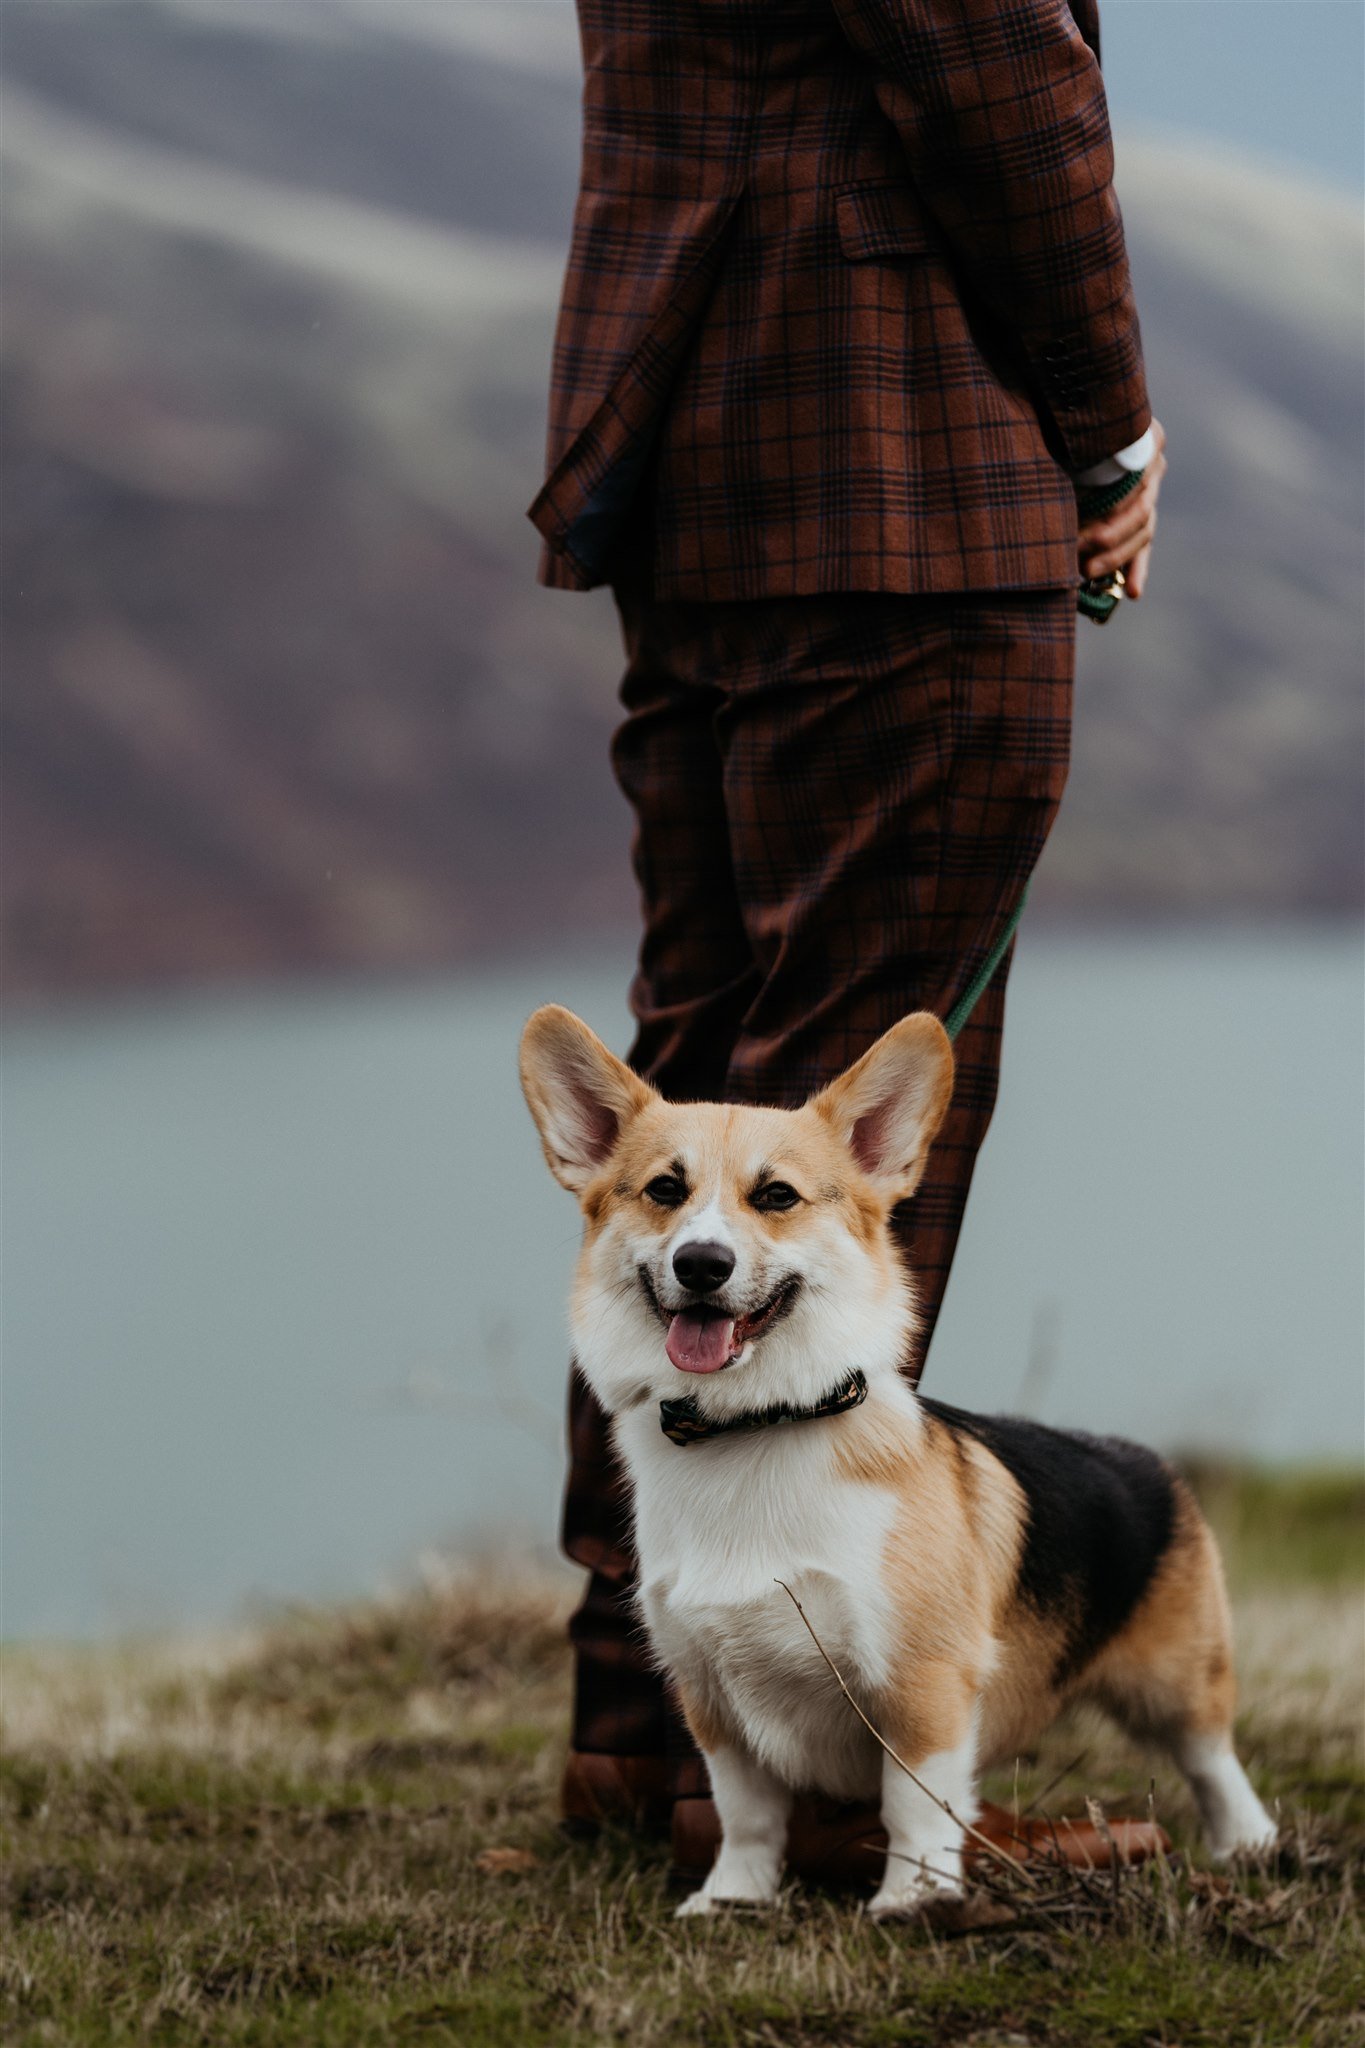 Corgi pup standing with groom at Oregon crest overlook